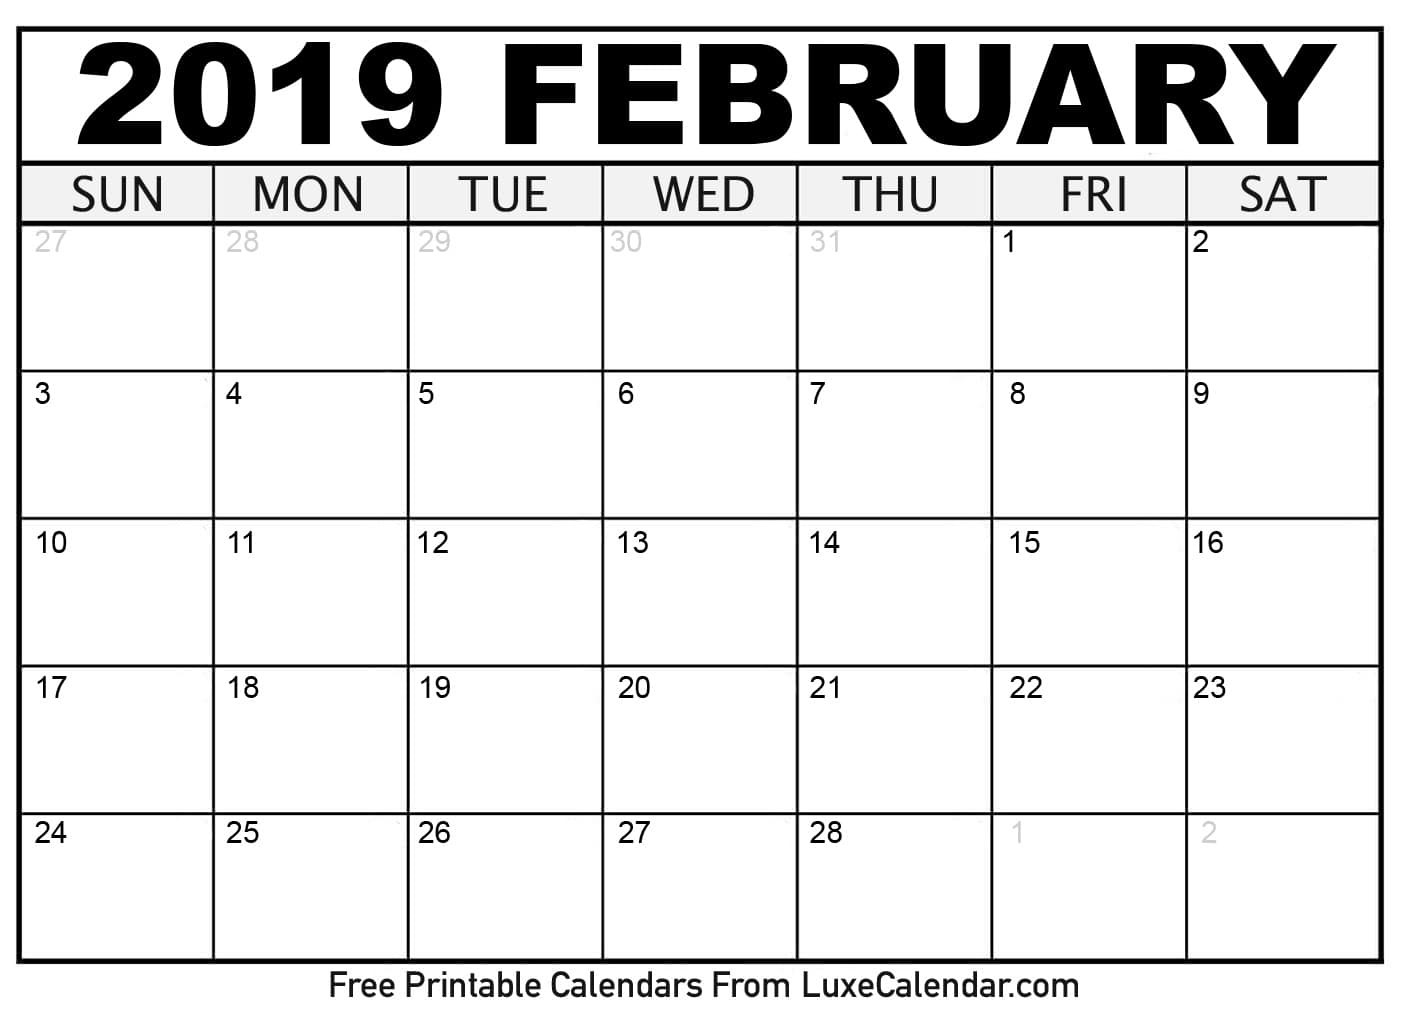 51 Free February 2019 Printable Calendar Templates PDF